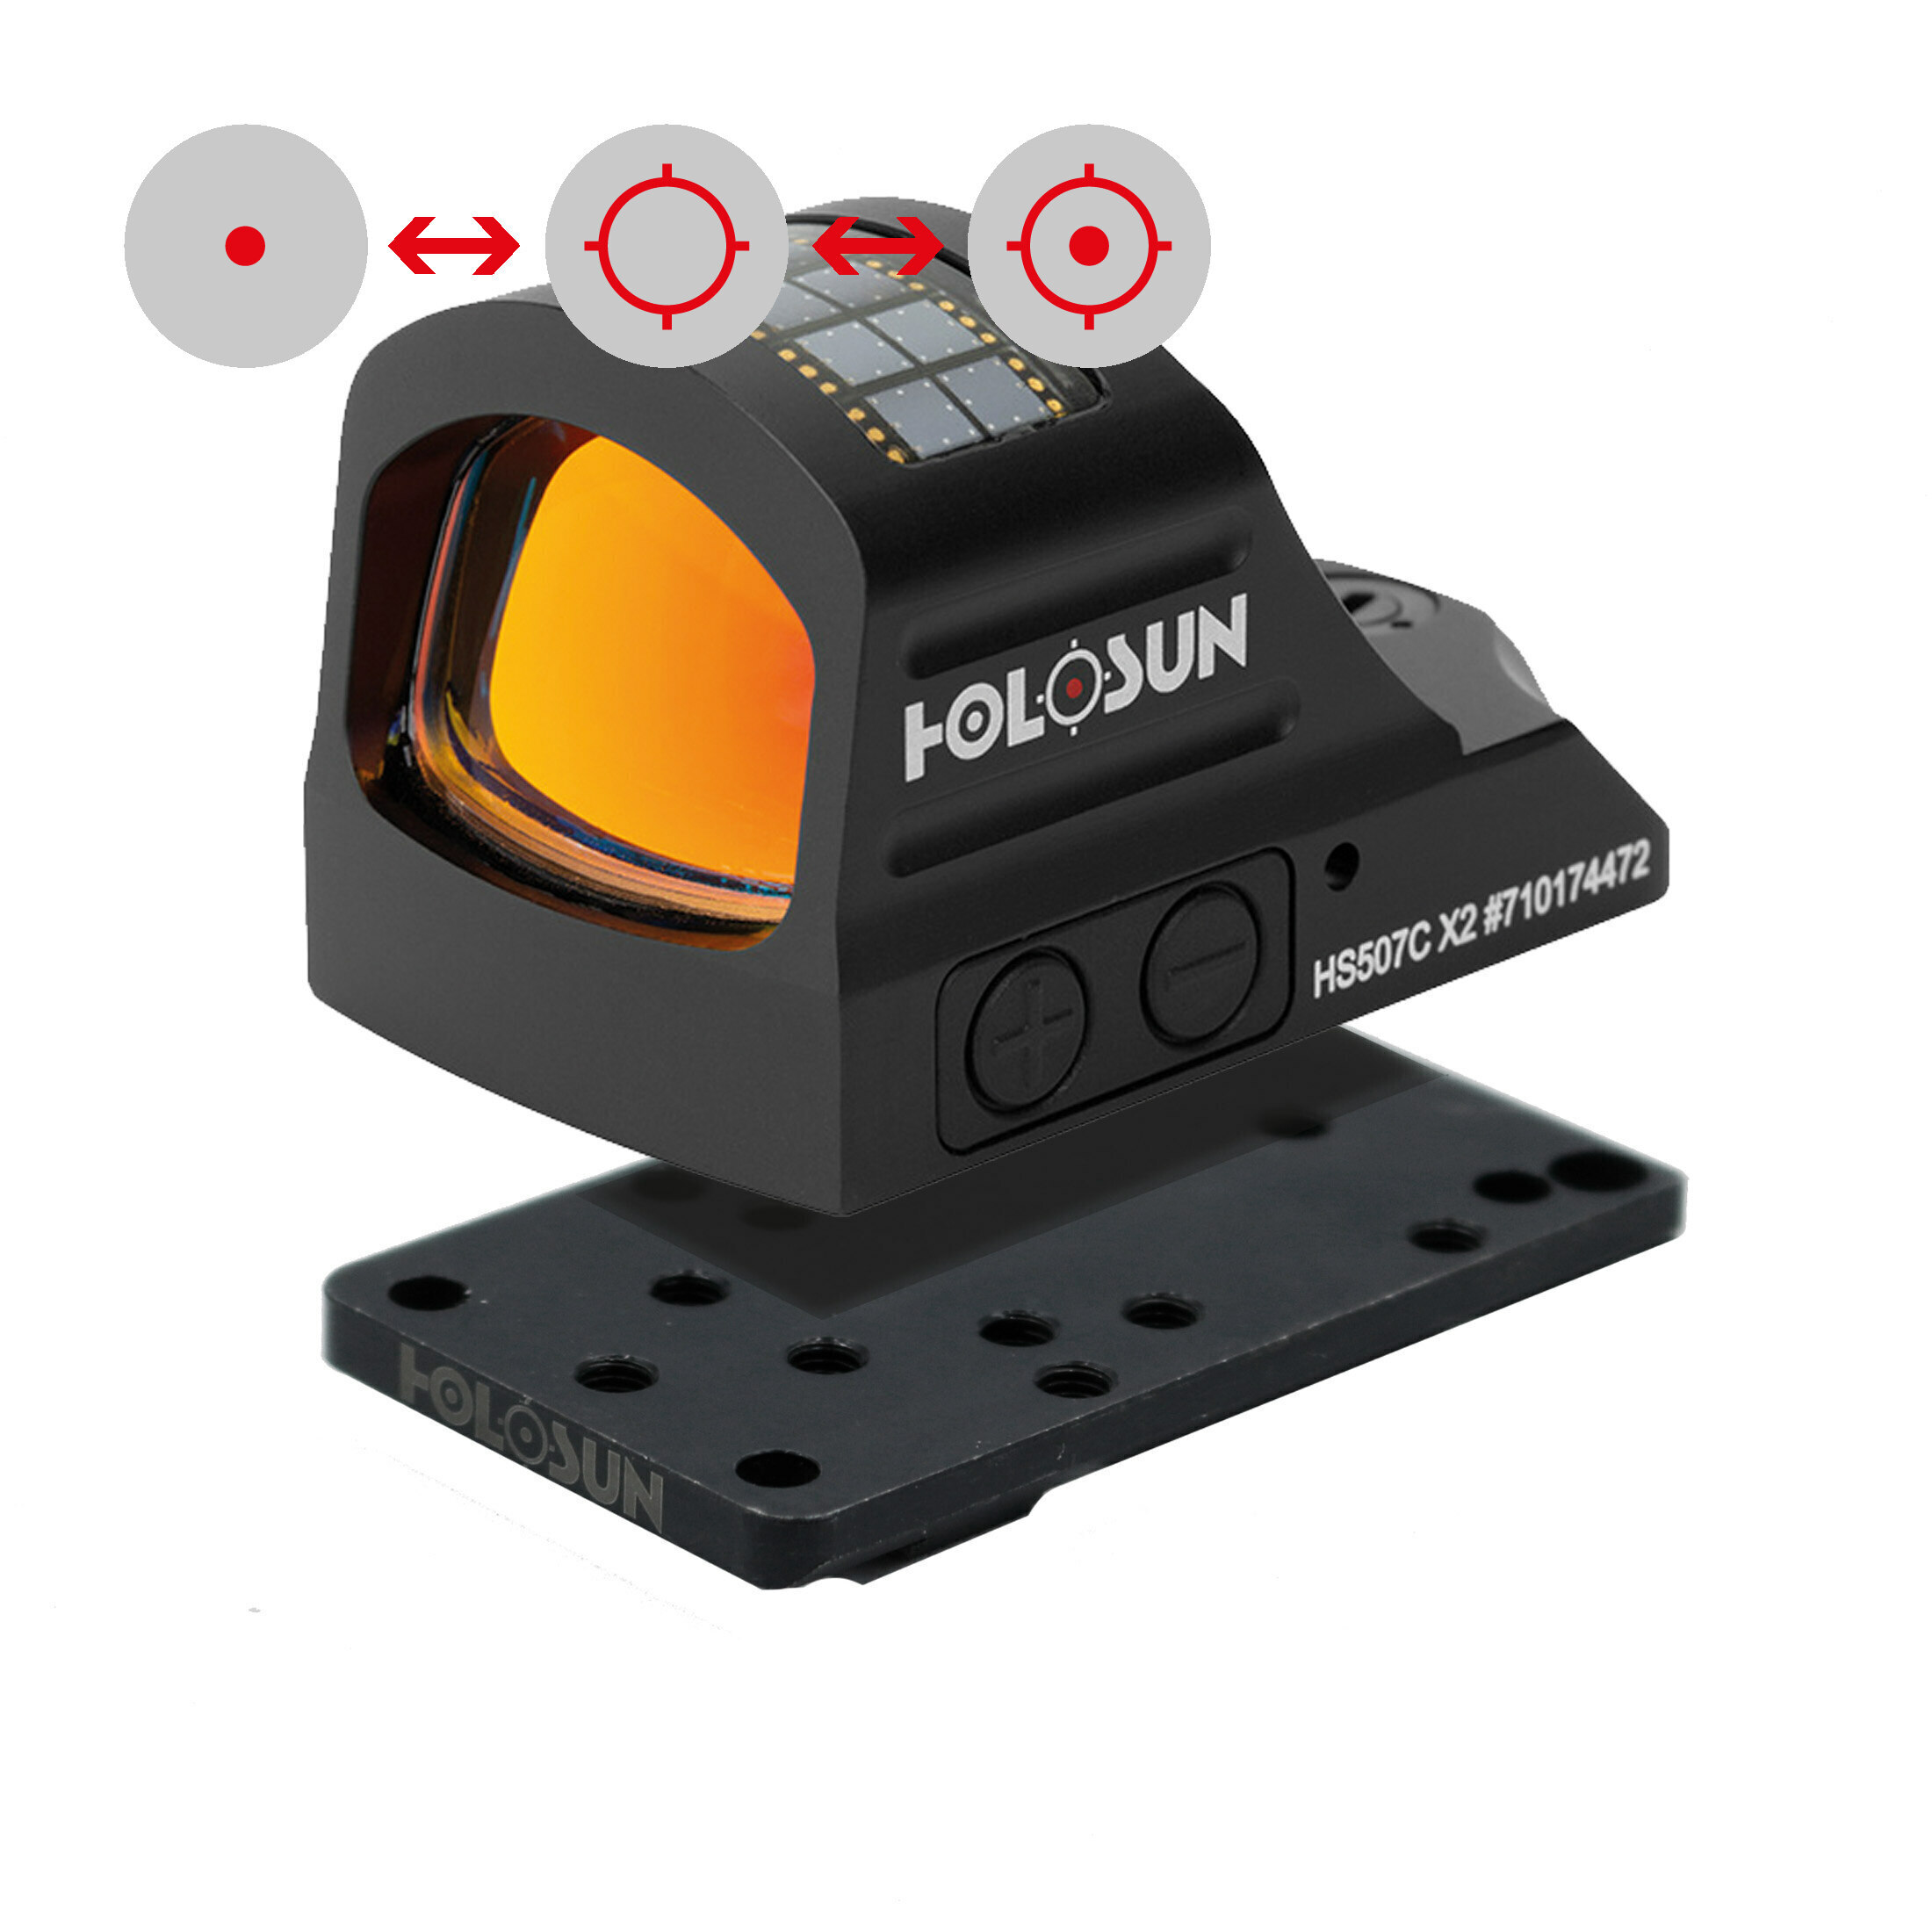 Holosun HS507C open reflex red dot sight switchable 2MOA dot, 32MOA circle dot reticle, solar cell …